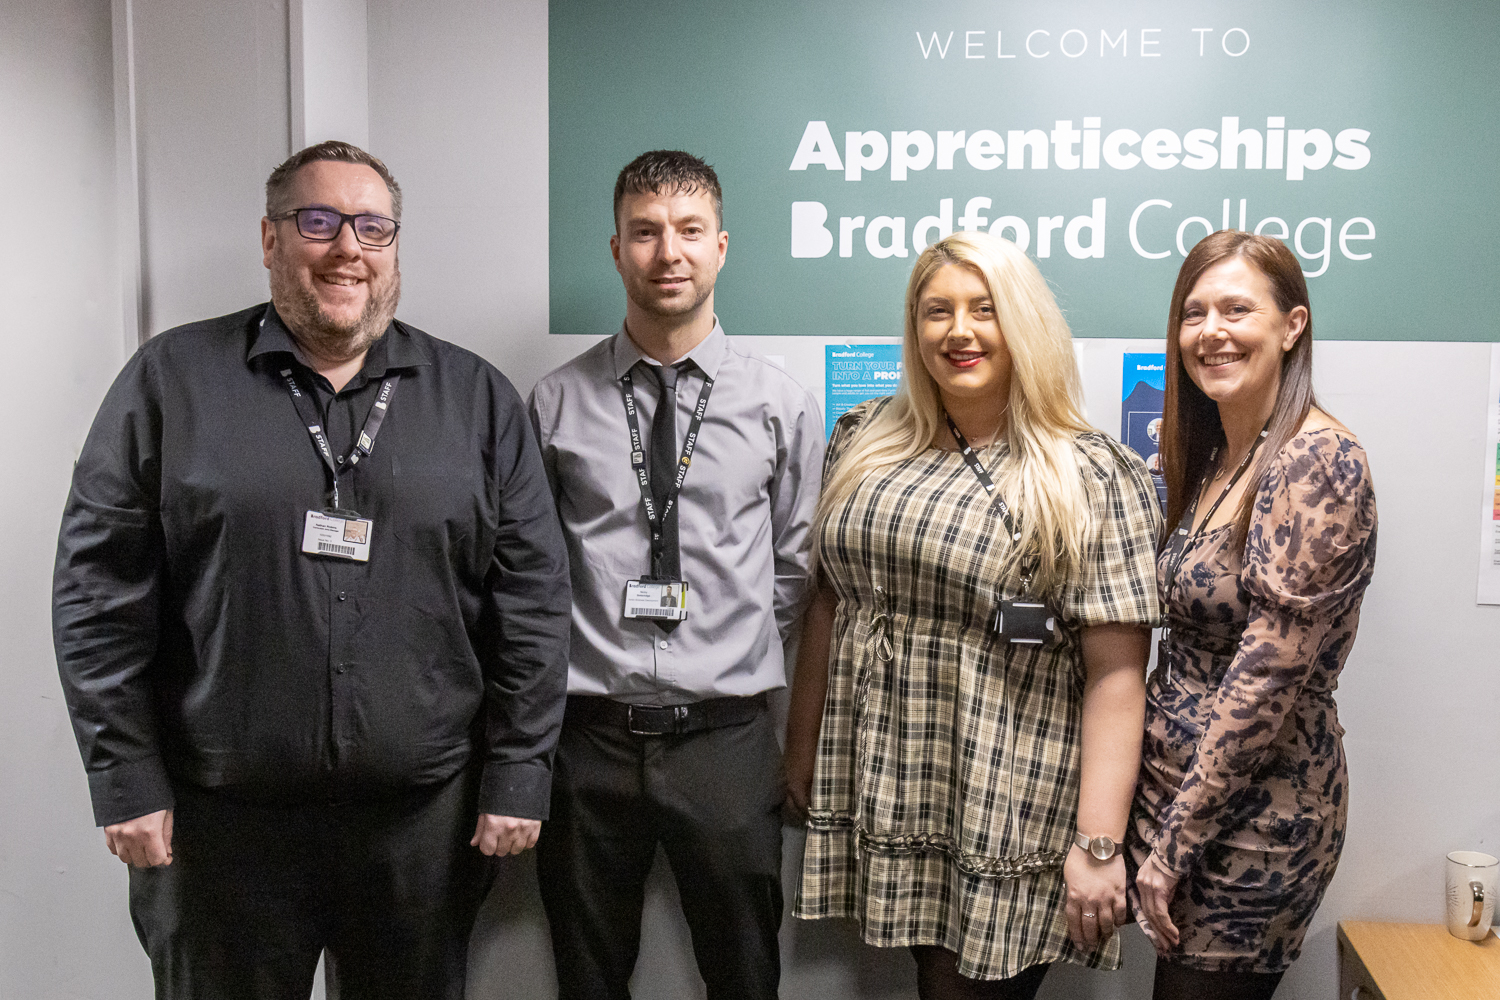 Meet the Apprenticeships Team: Part 2 of 2